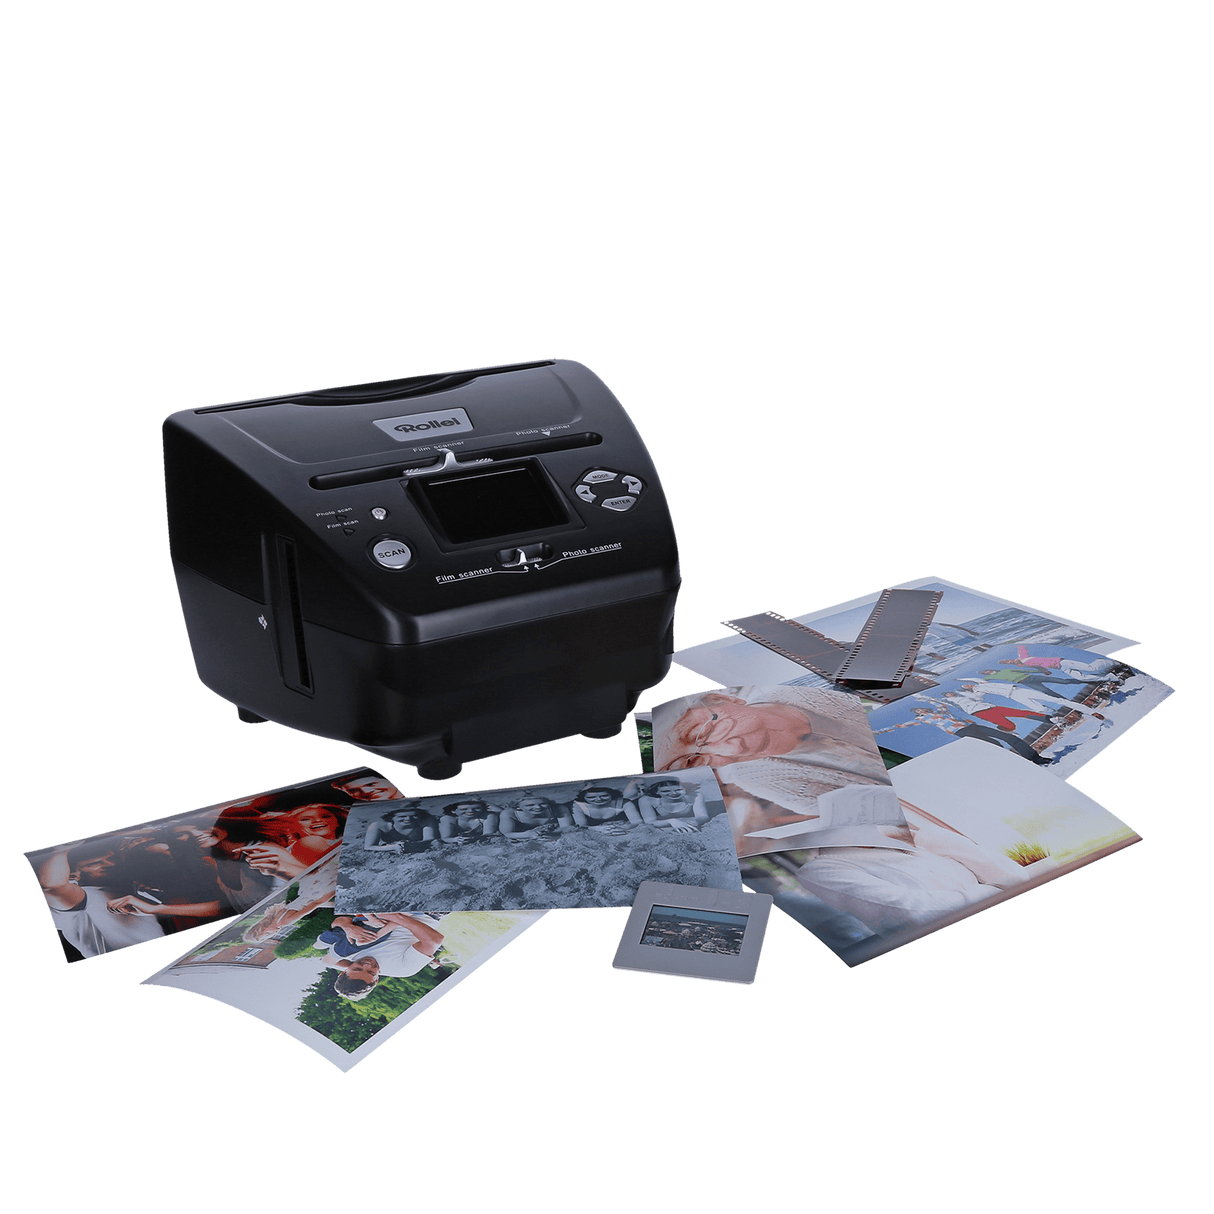 PDF-S 240 photo - scanner – Rollei slide SE 